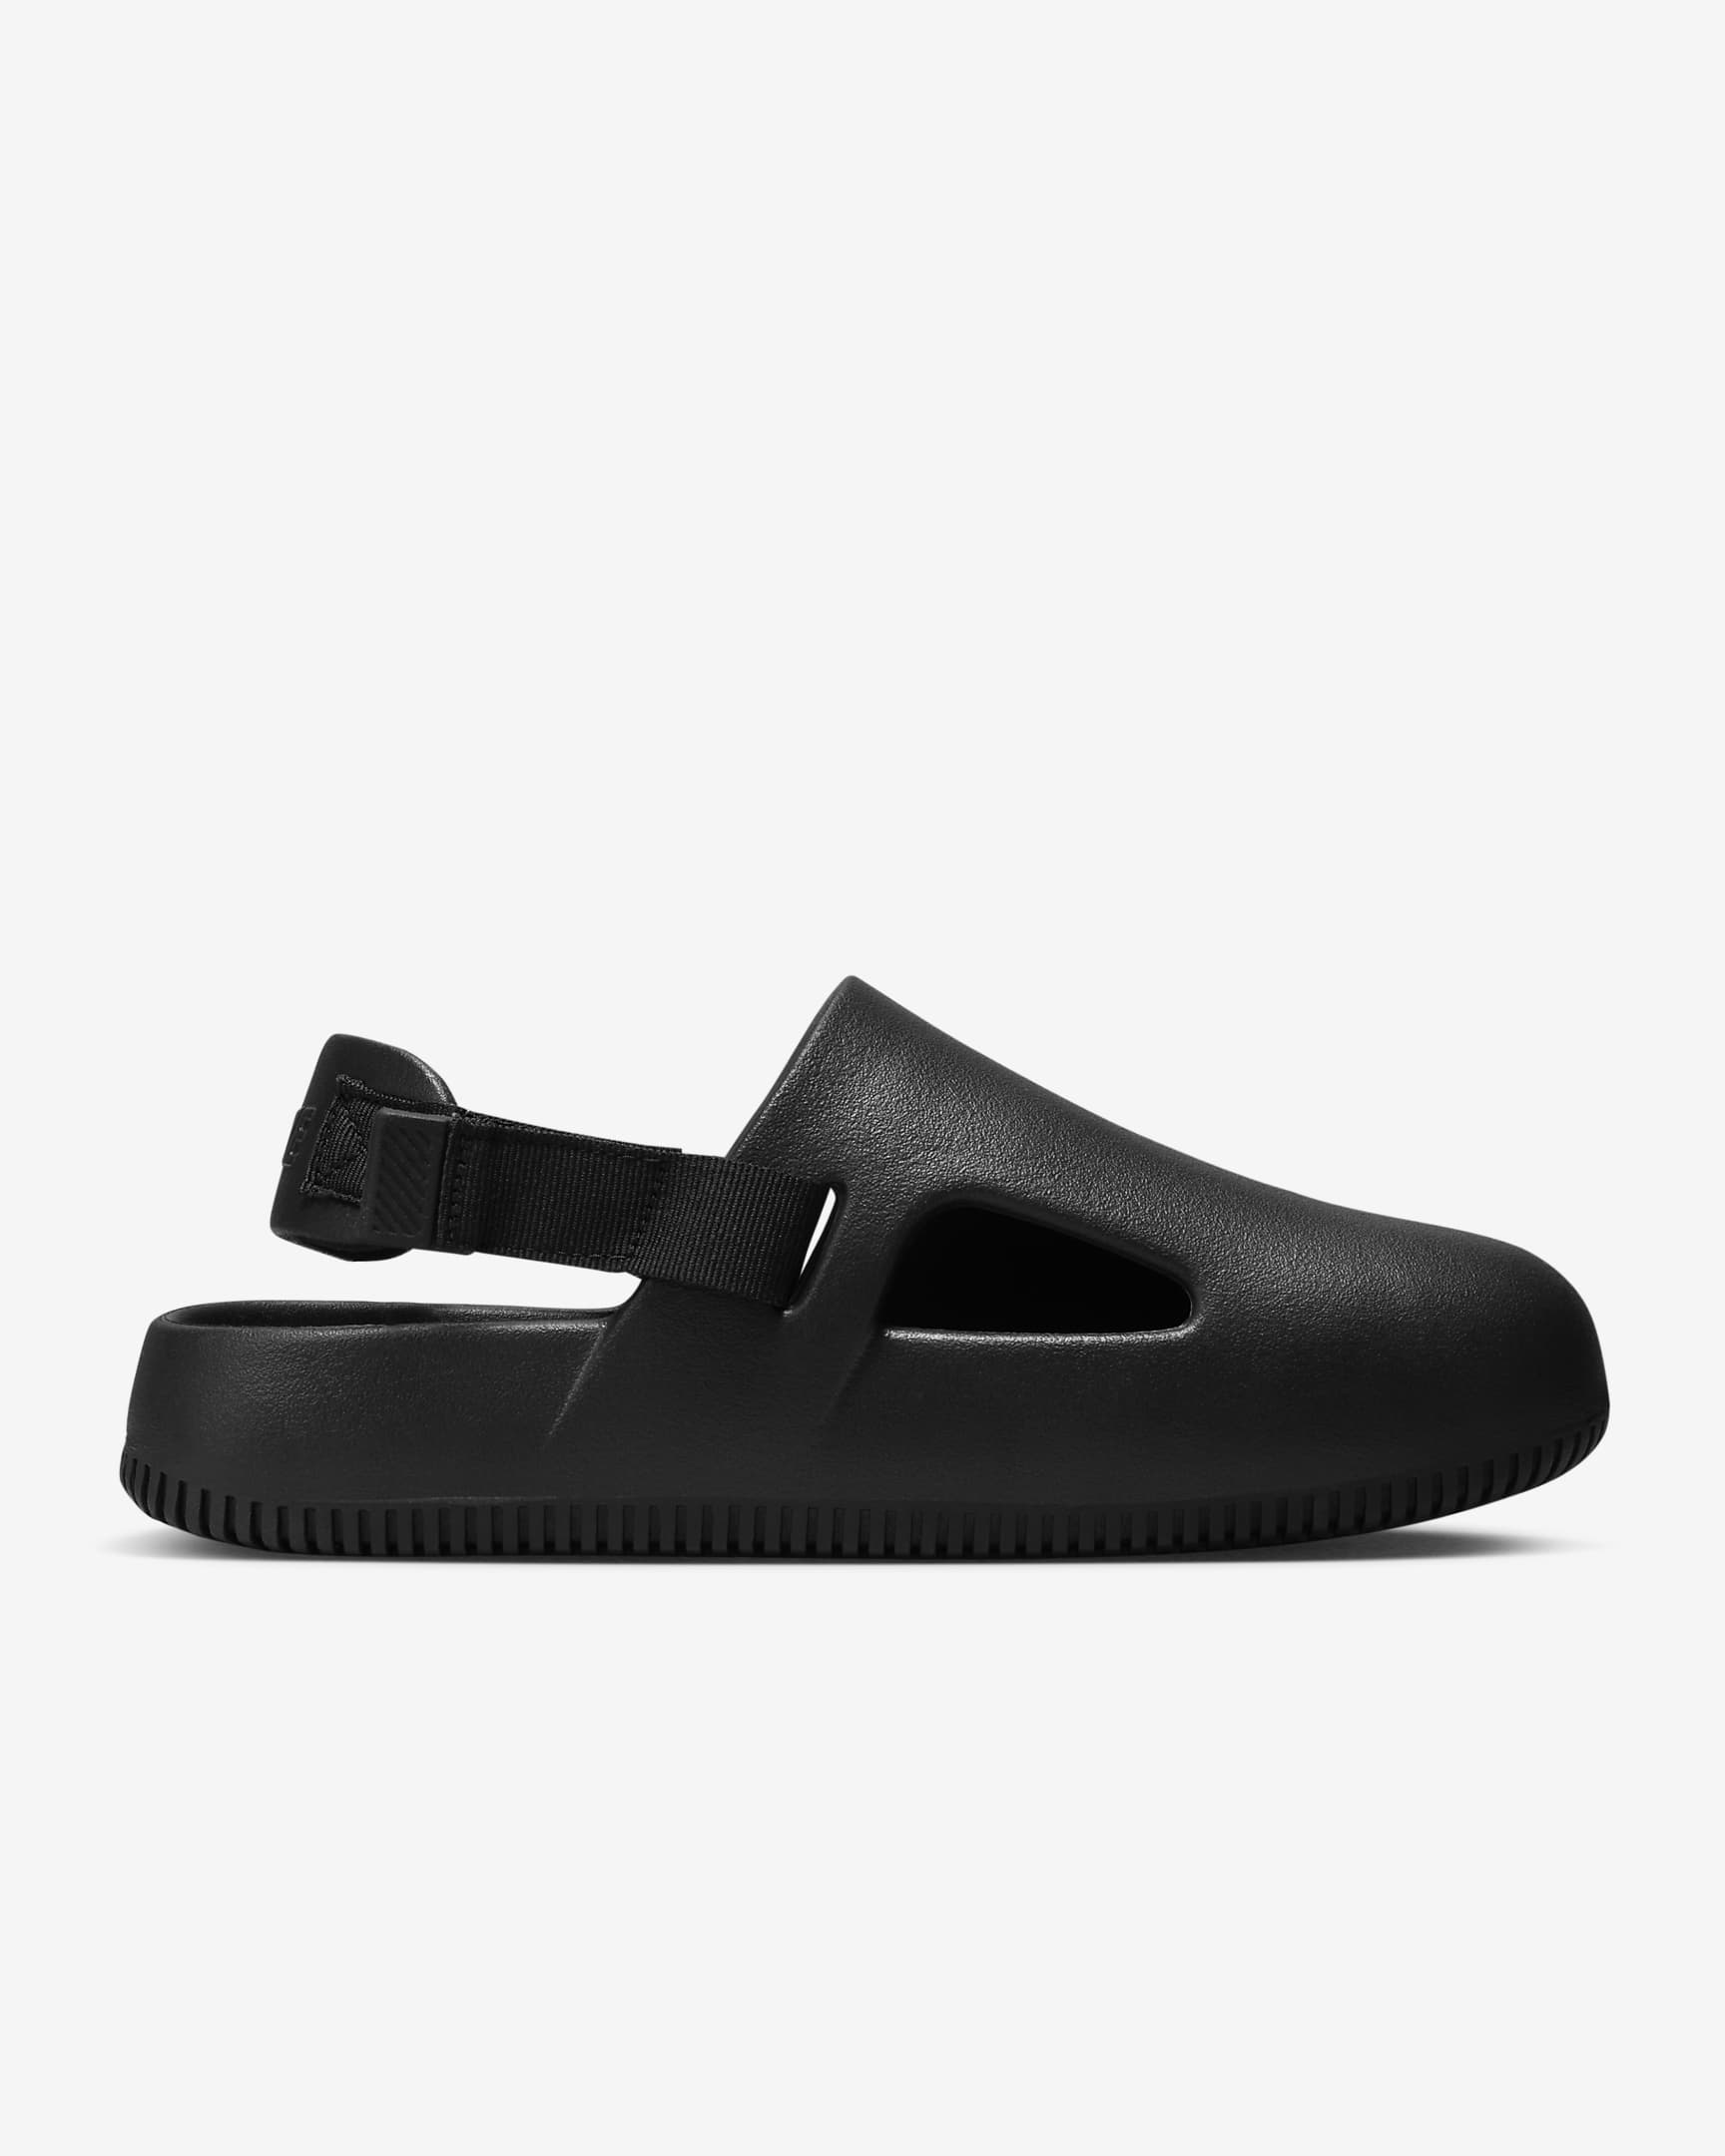 Nike Calm Women's Mules - Black/Black